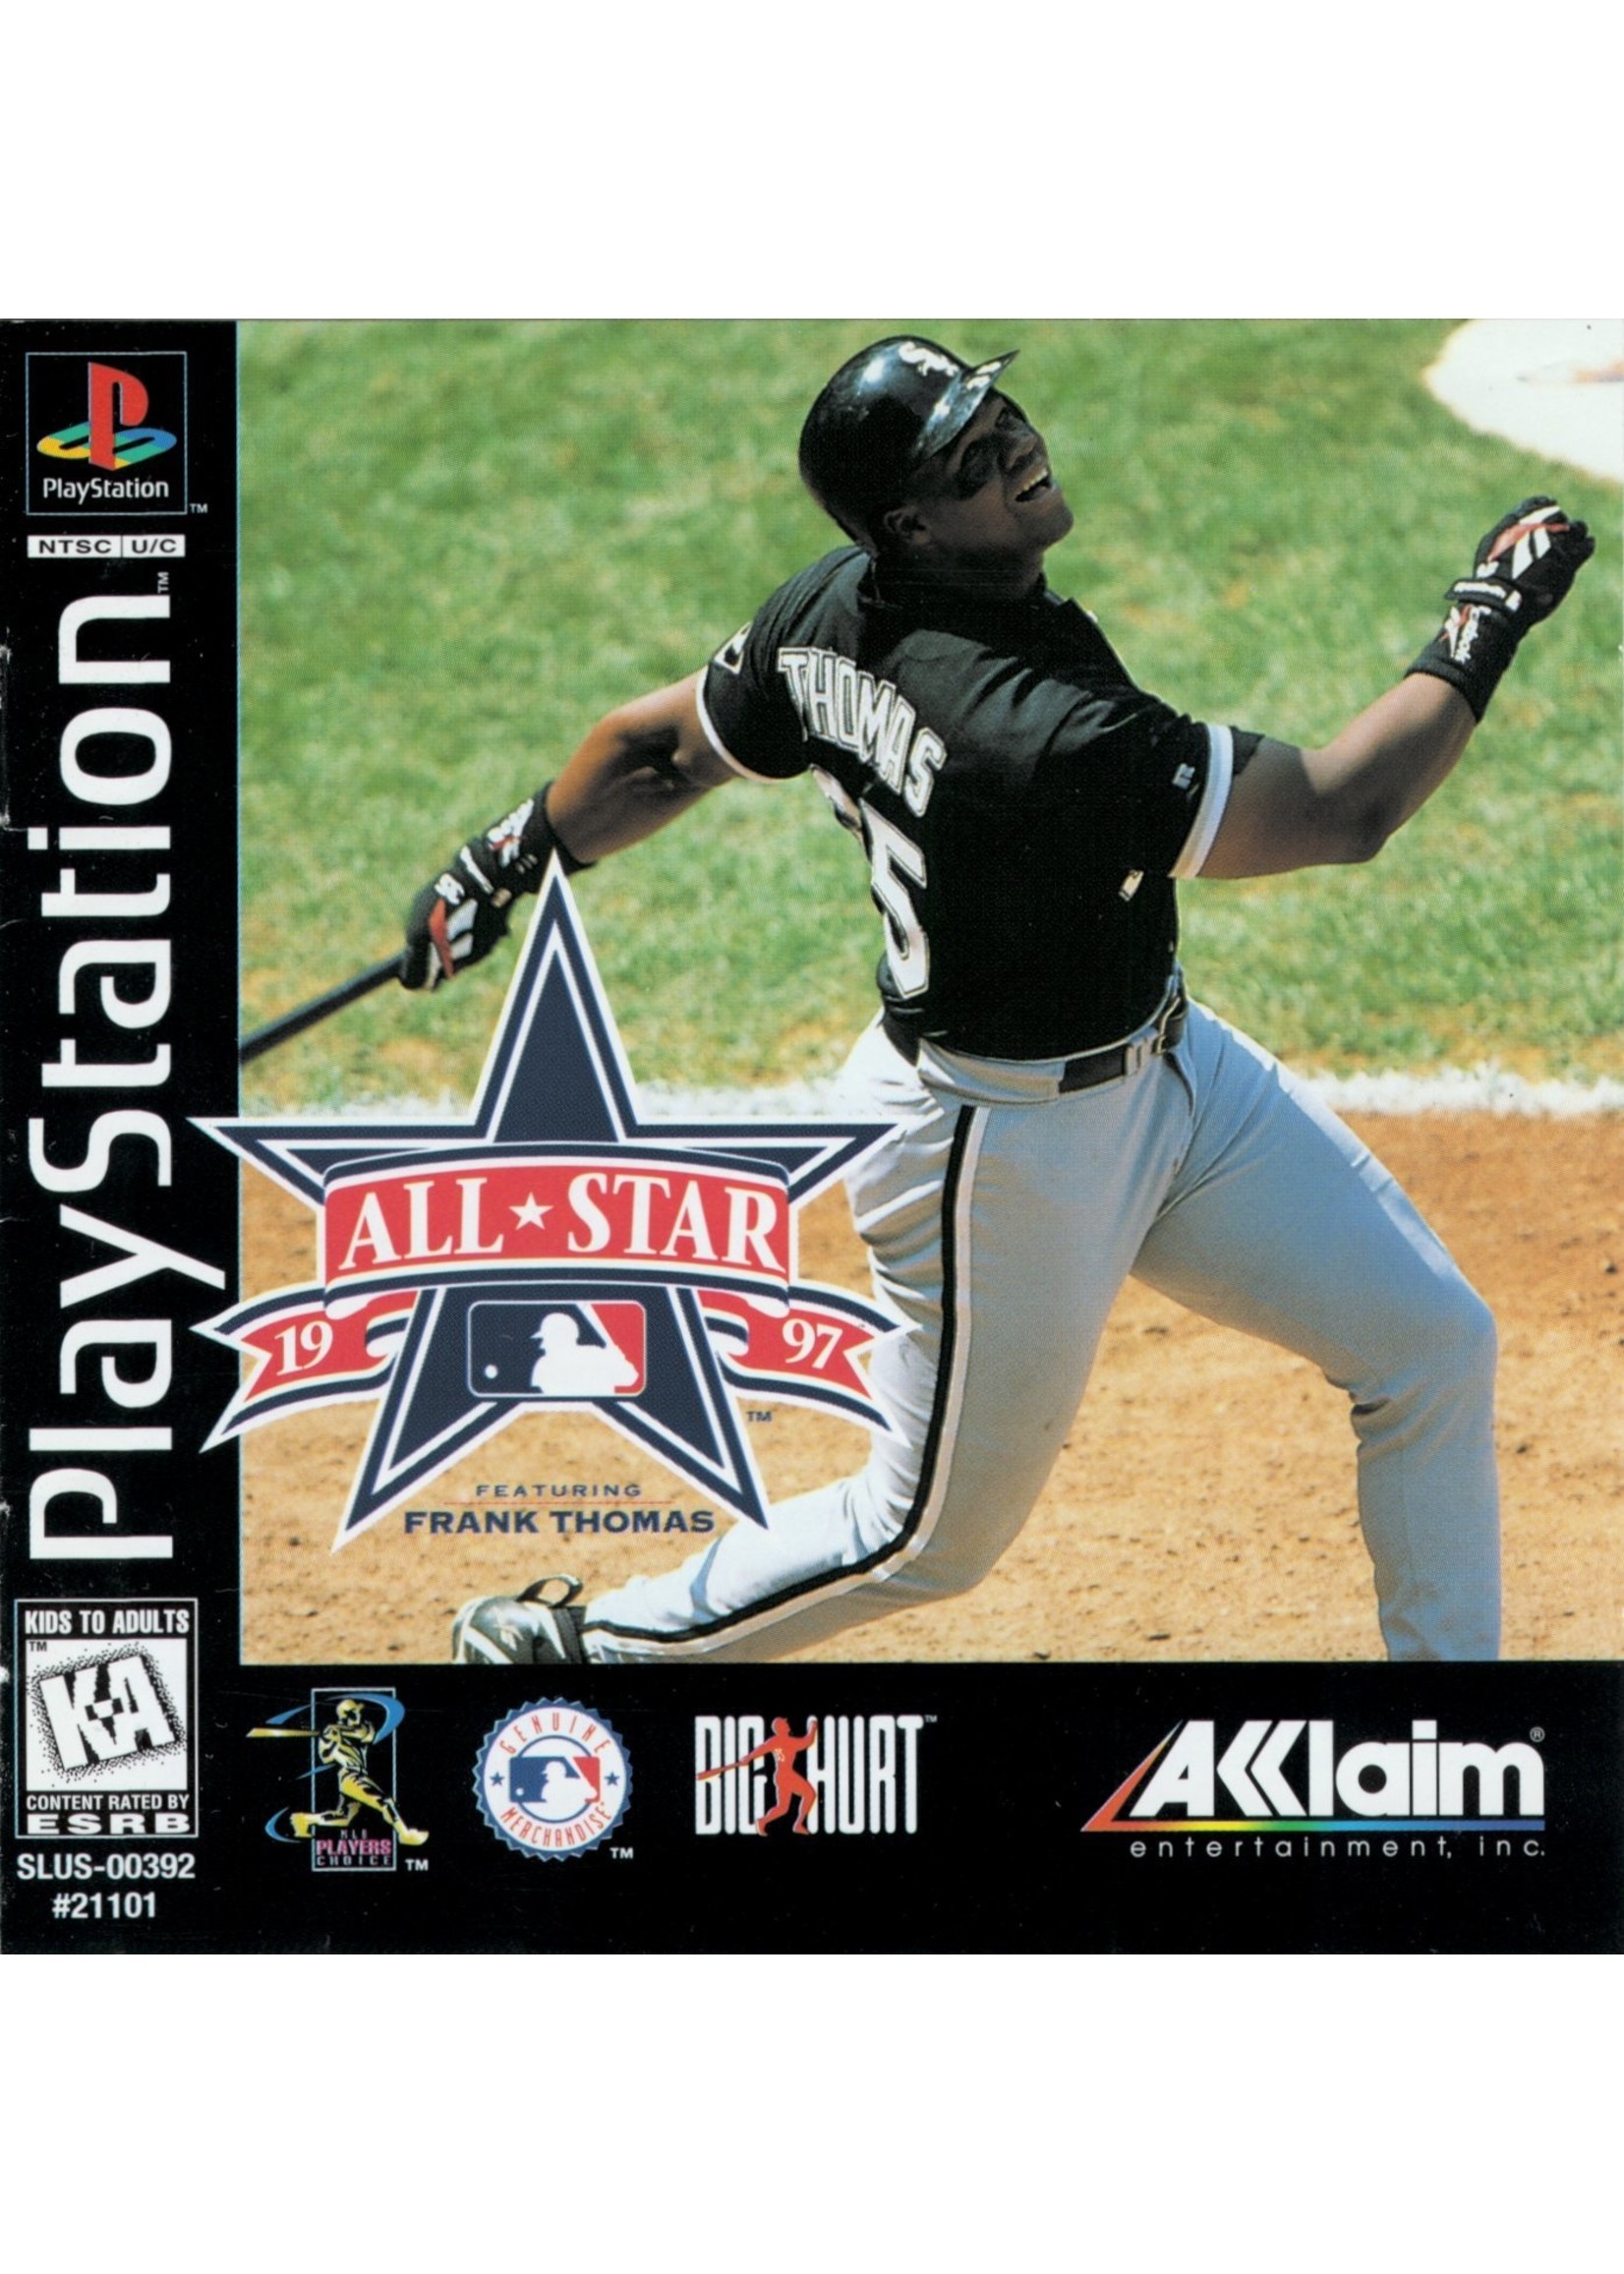 Sony Playstation 1 (PS1) All-Star Baseball 97